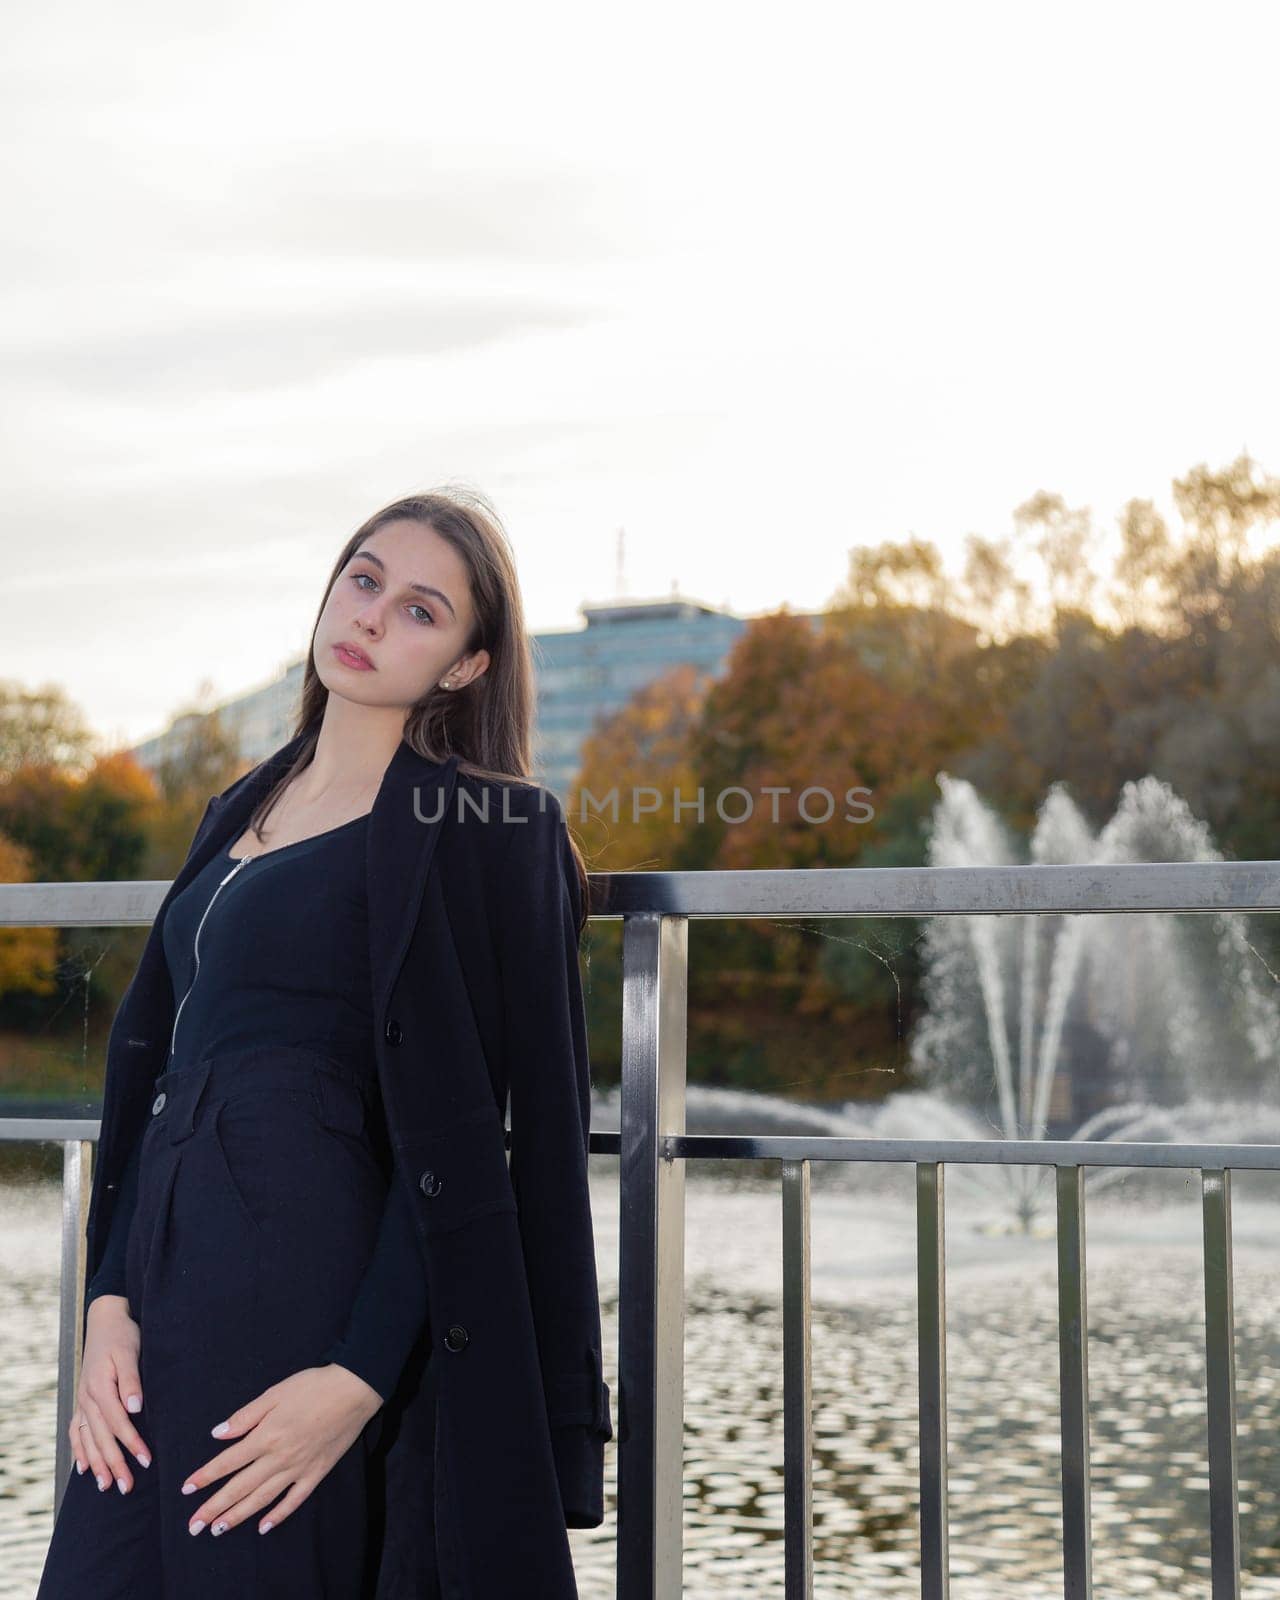 Portrait of a girl on a bridge near a pond in a city park